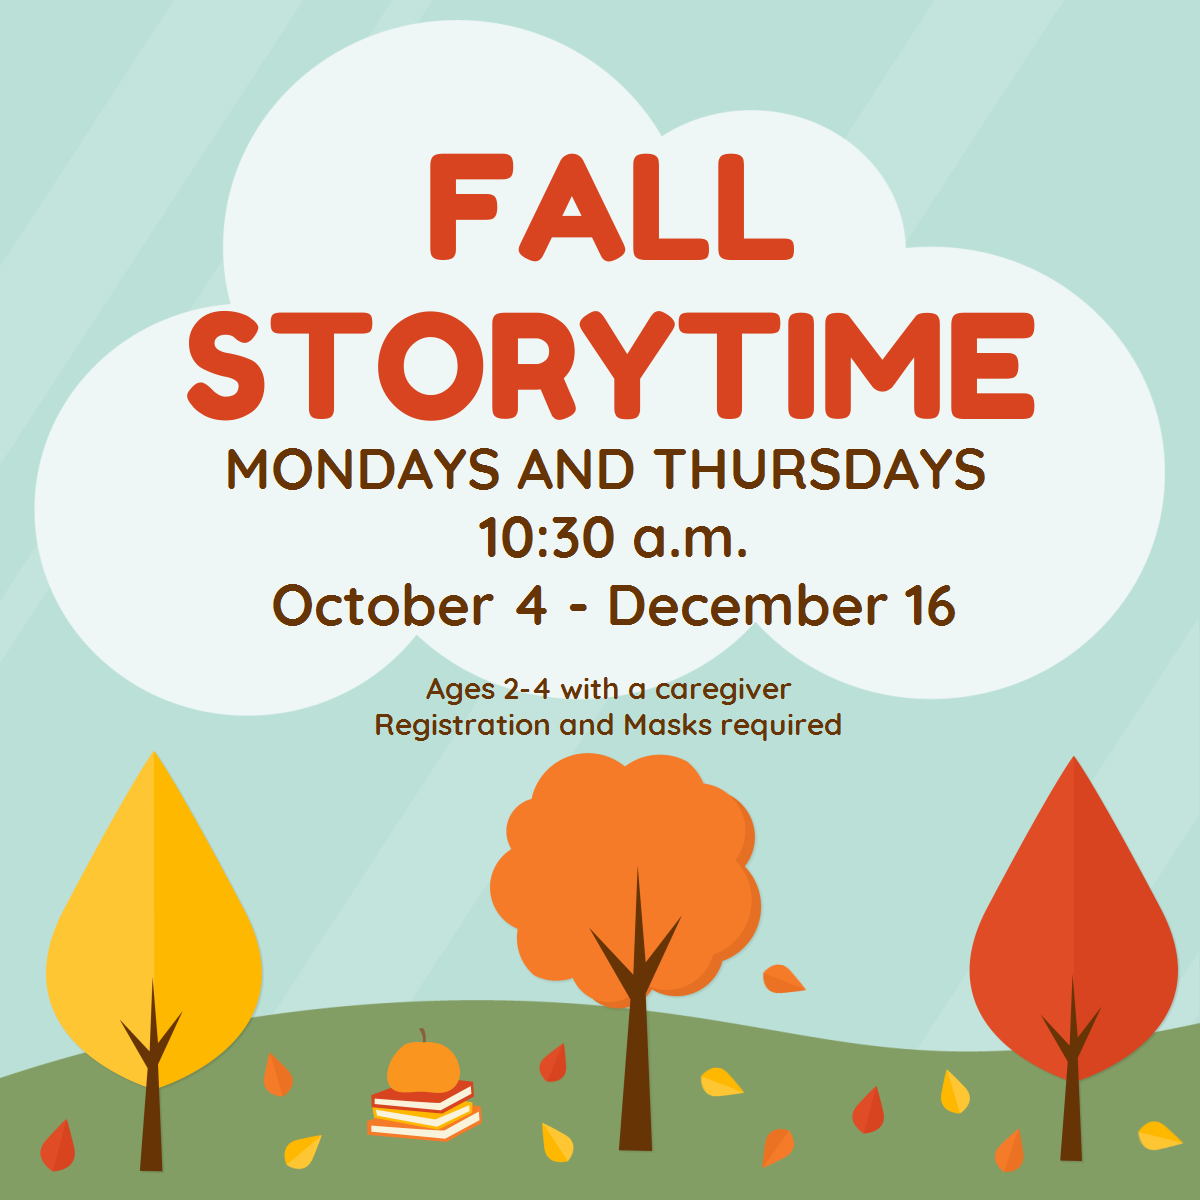 Fall Storytime Mondays and Thursdays at 10:30am October 4-December 16